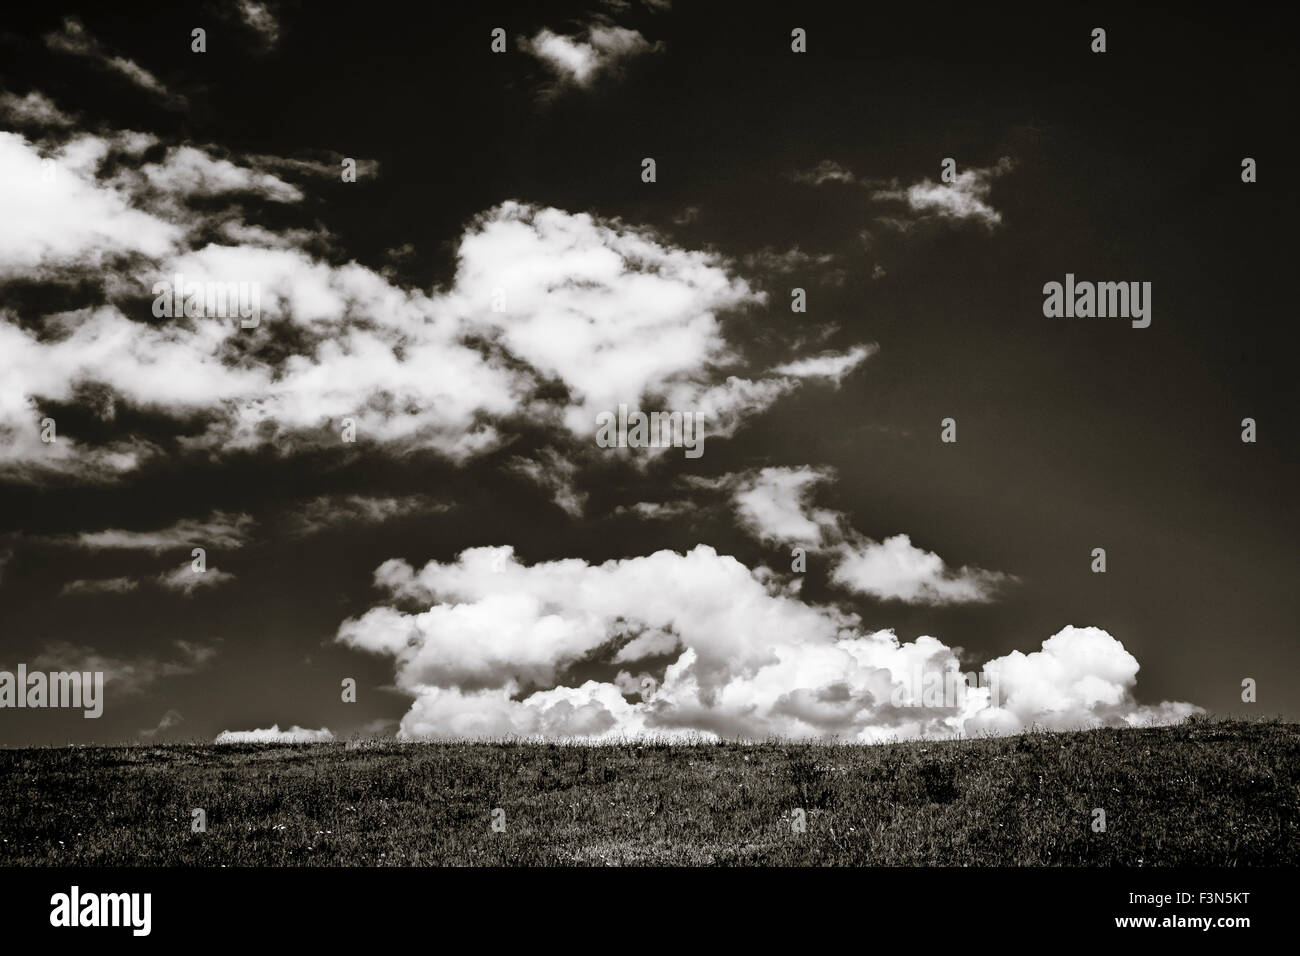 Black and white cloudscape with big white clouds over the grass. Photo taken in Transylvania, Romania. Stock Photo